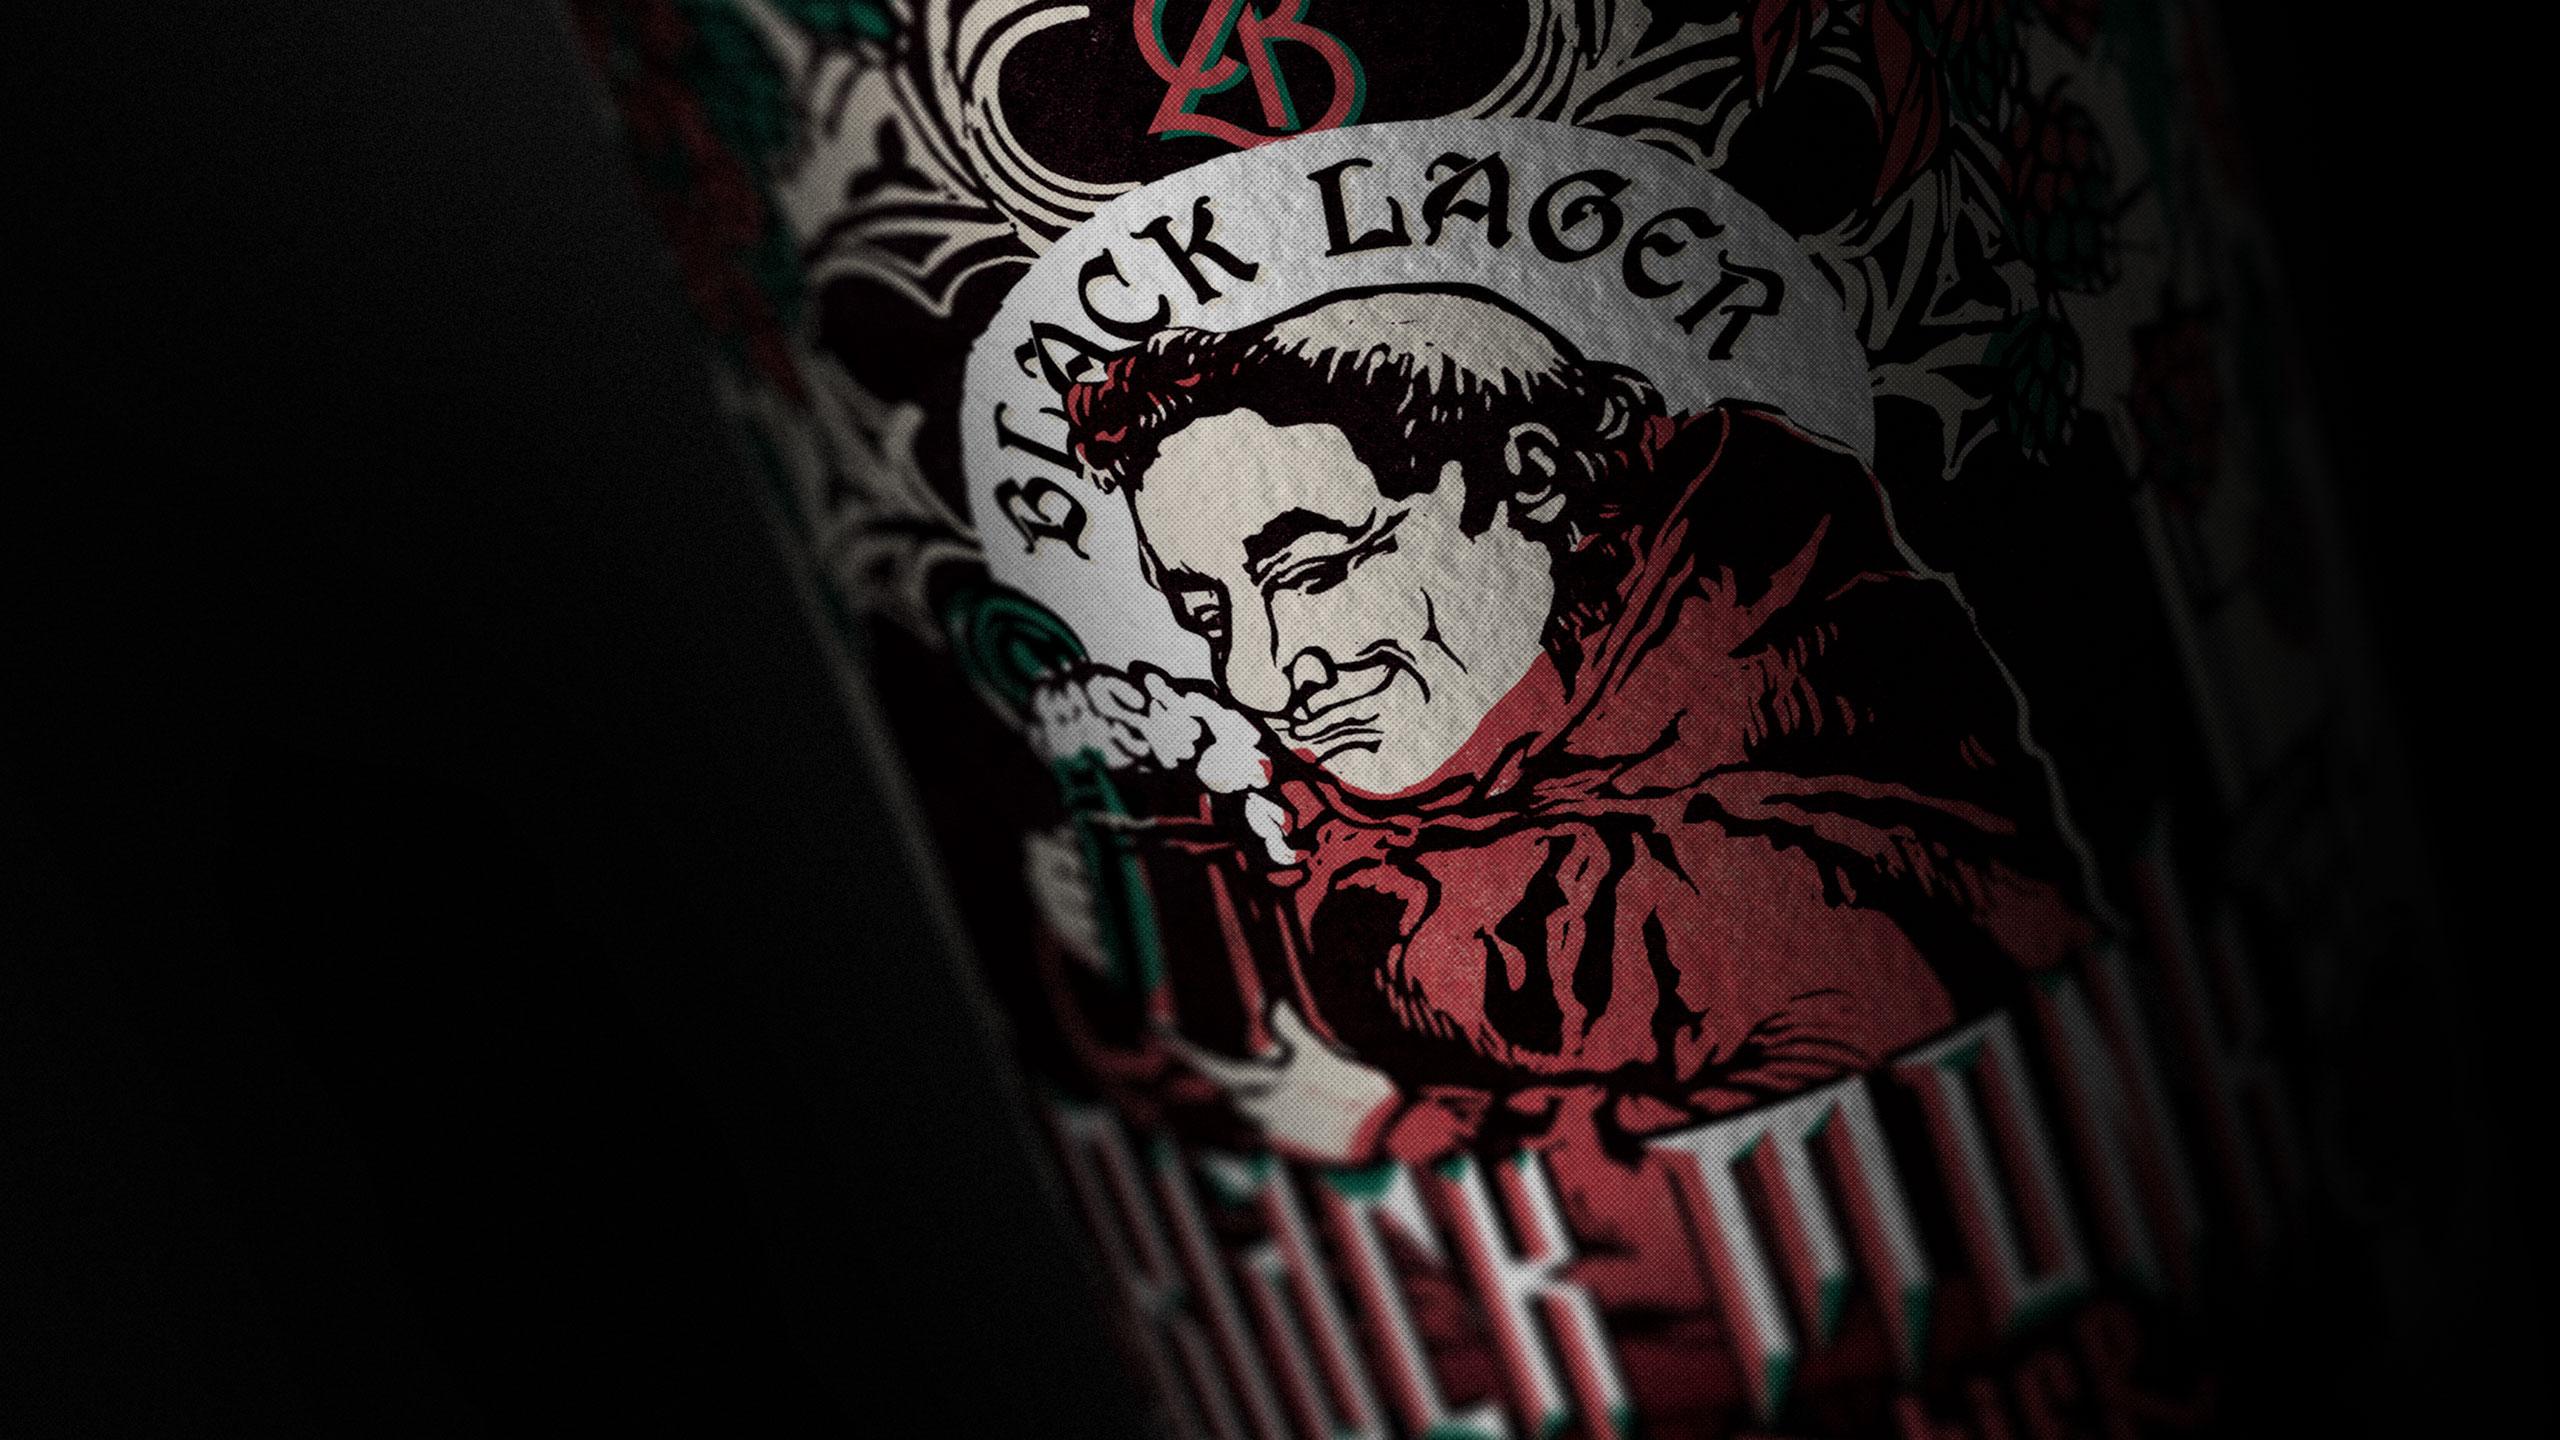 Tried-and-True-Design-Auckland-Zeelandt-rebrand-beer-bottle-Black-Monk